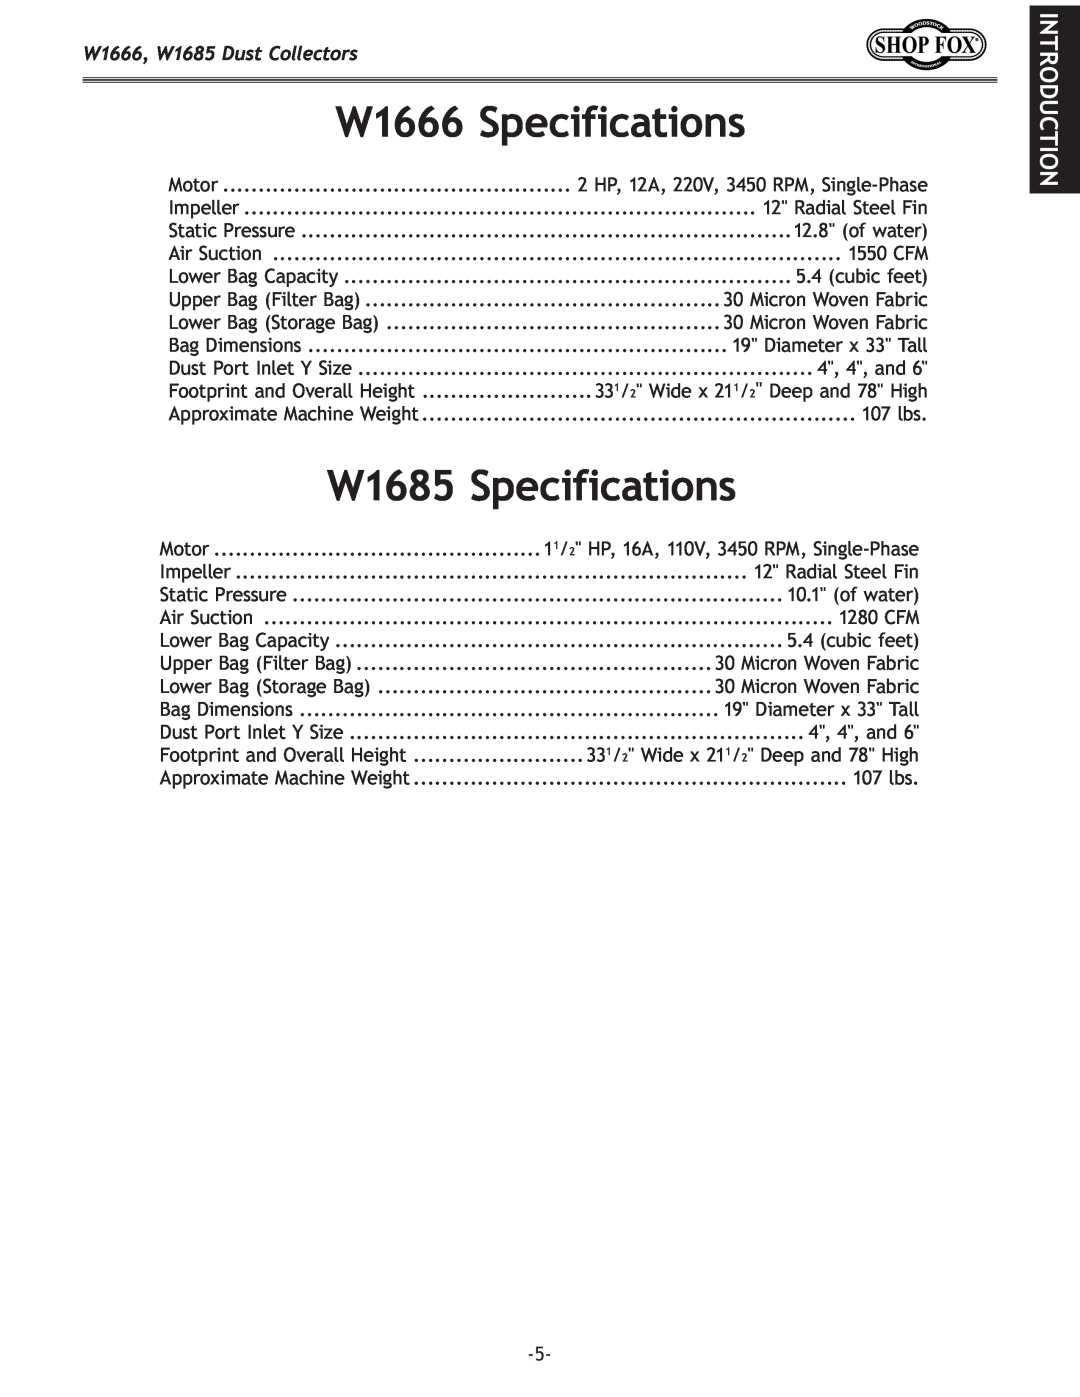 Woodstock DUST COLLECTORS W1666 Specifications, W1685 Specifications, Introduction, W1666, W1685 Dust Collectors 